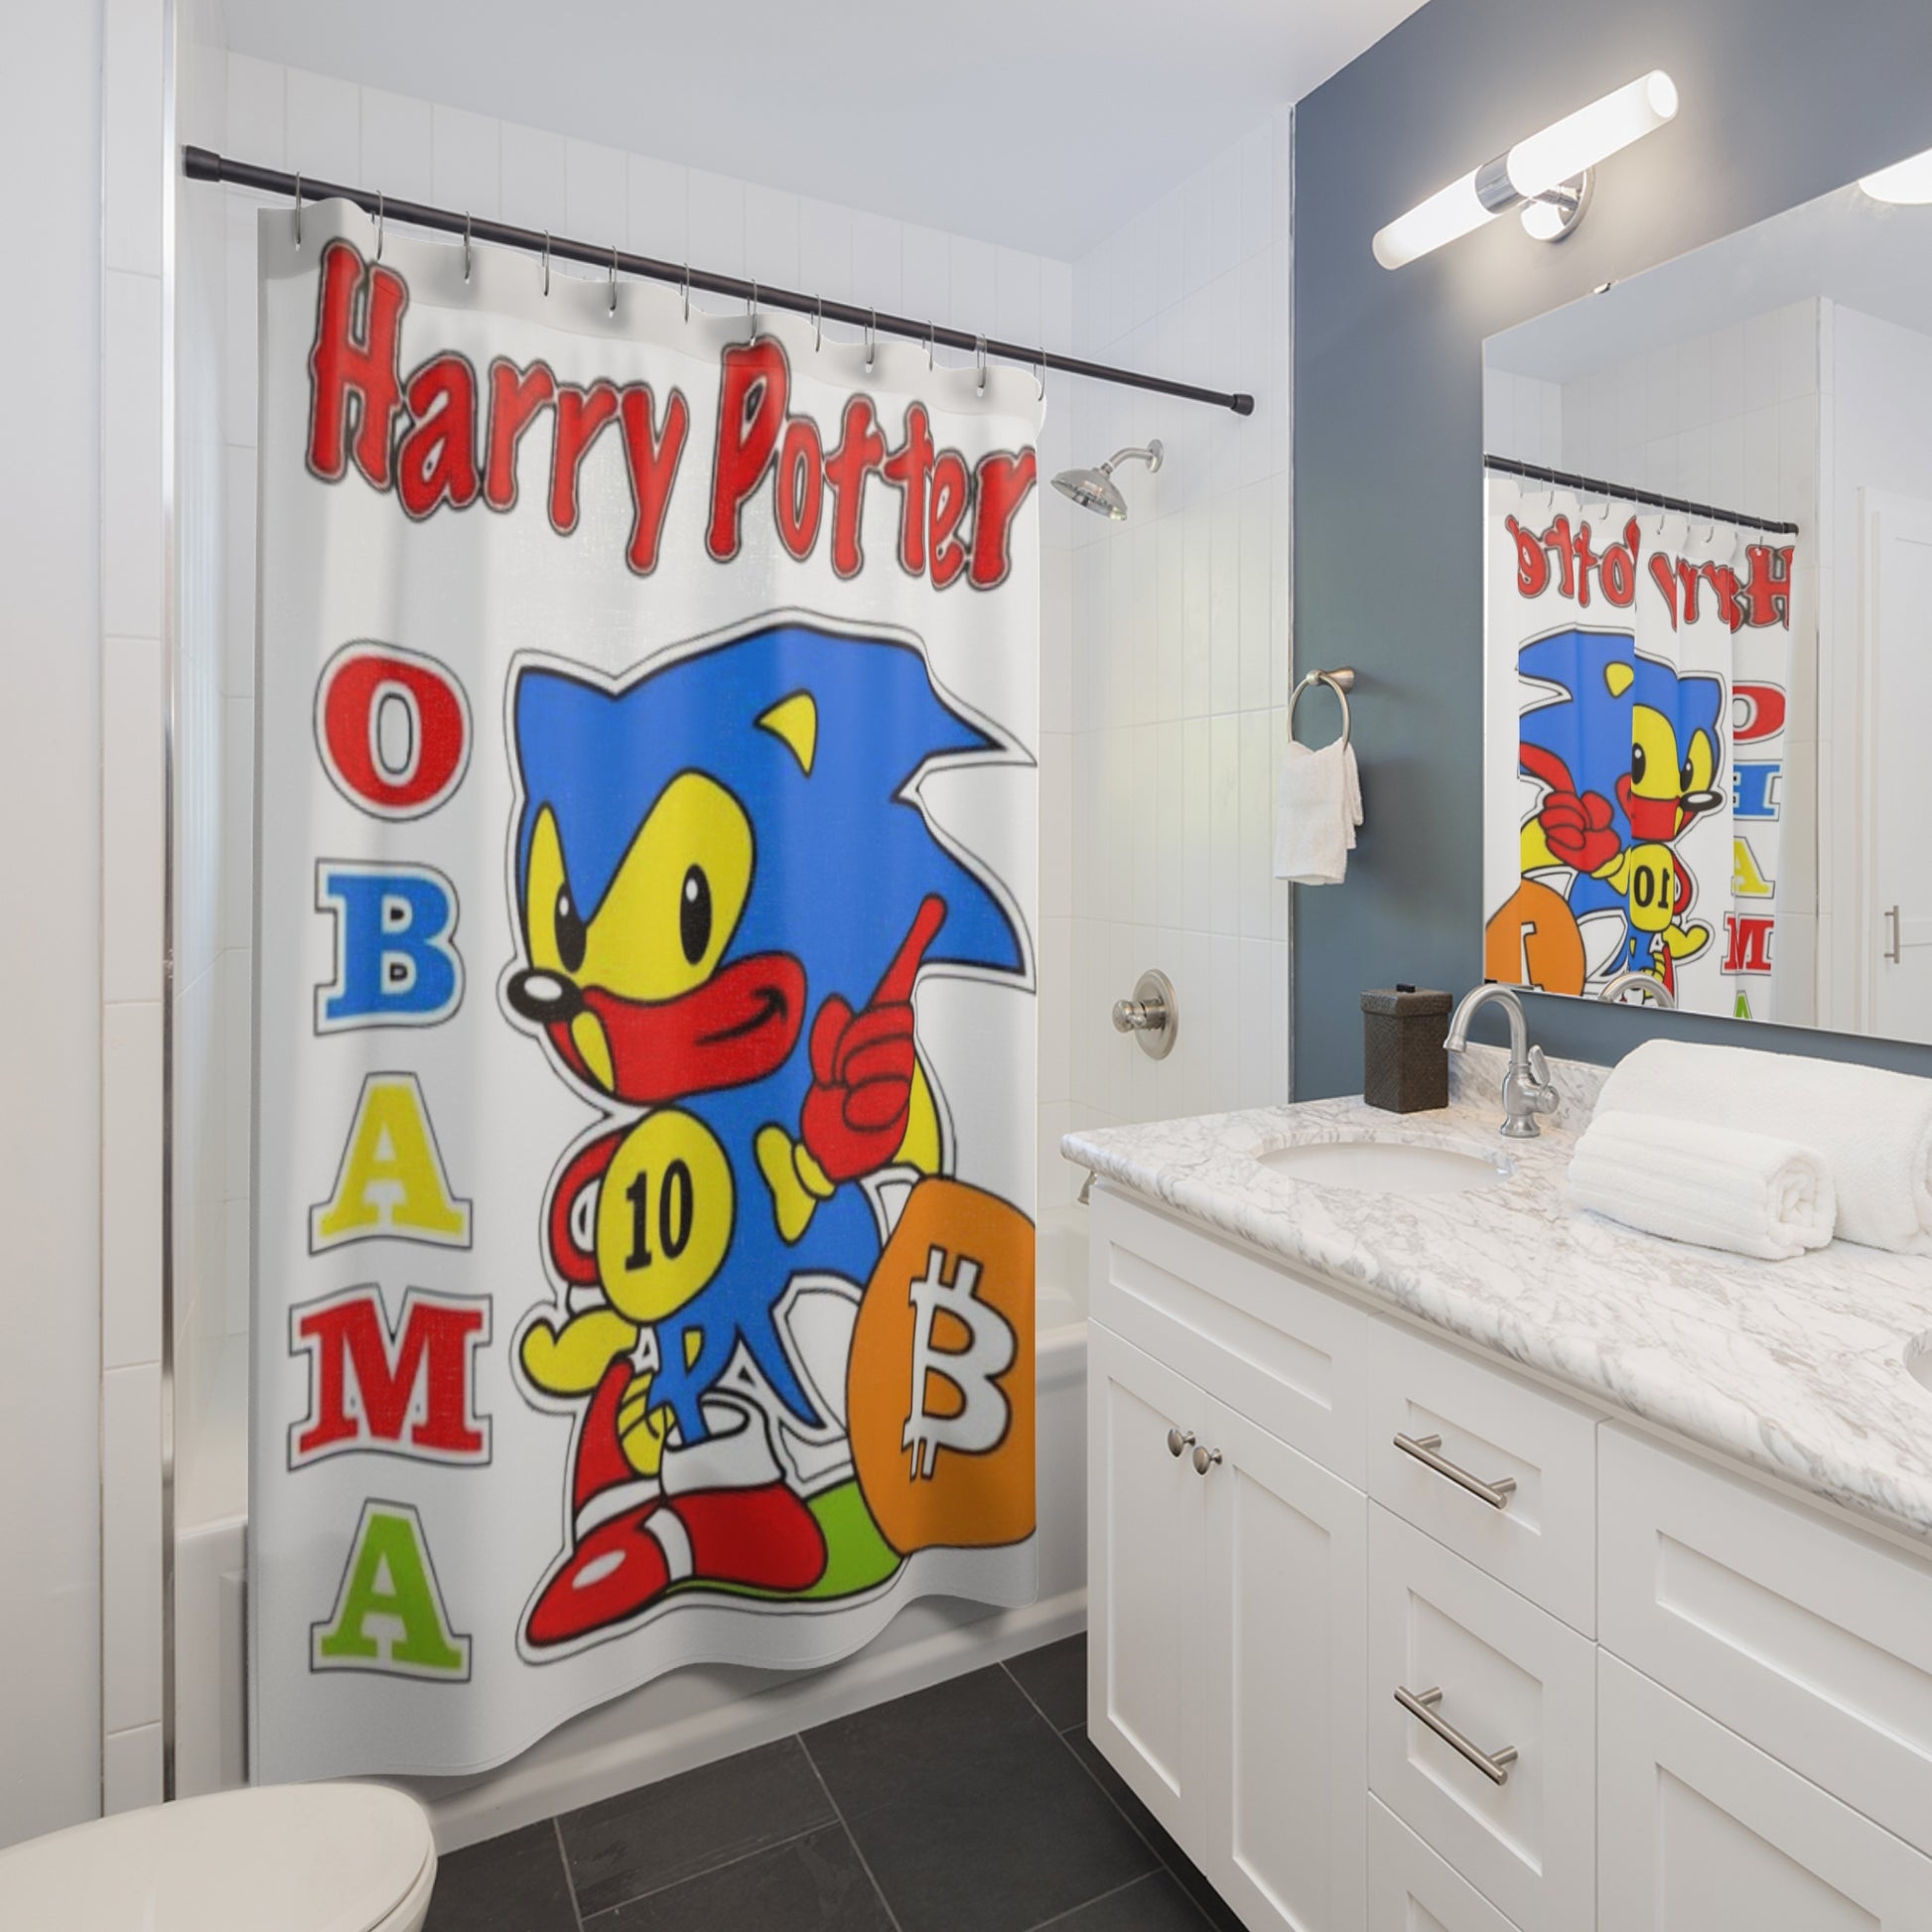 My Harry Potter bathroom progress! Shower curtain from society6